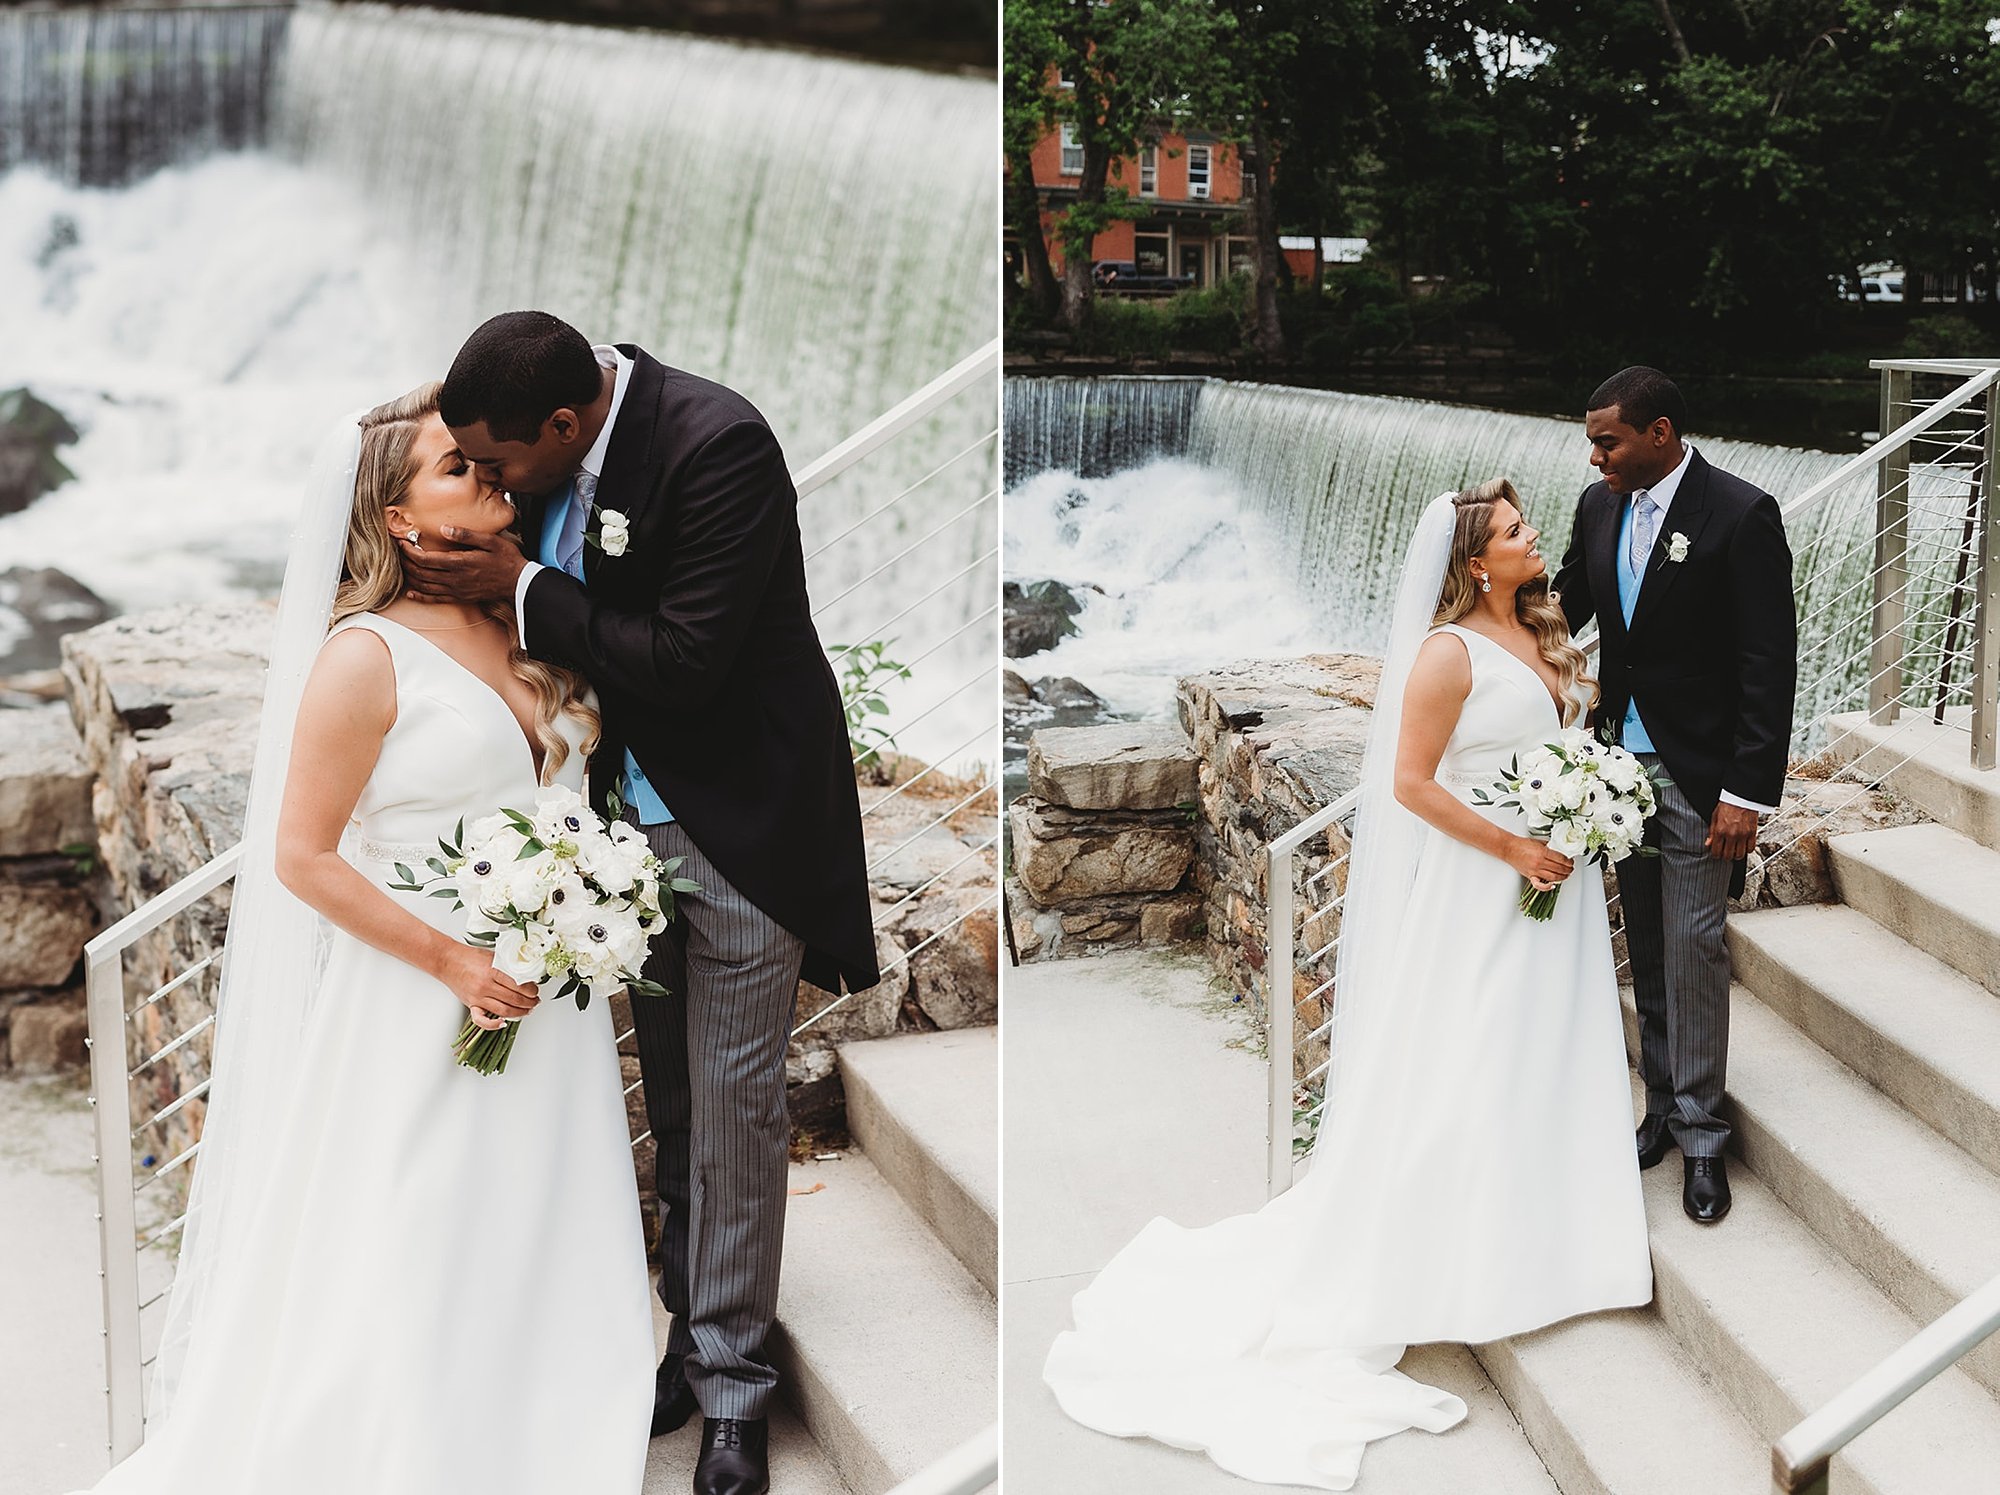 newlyweds kiss on steps near waterfall in Beacon NY